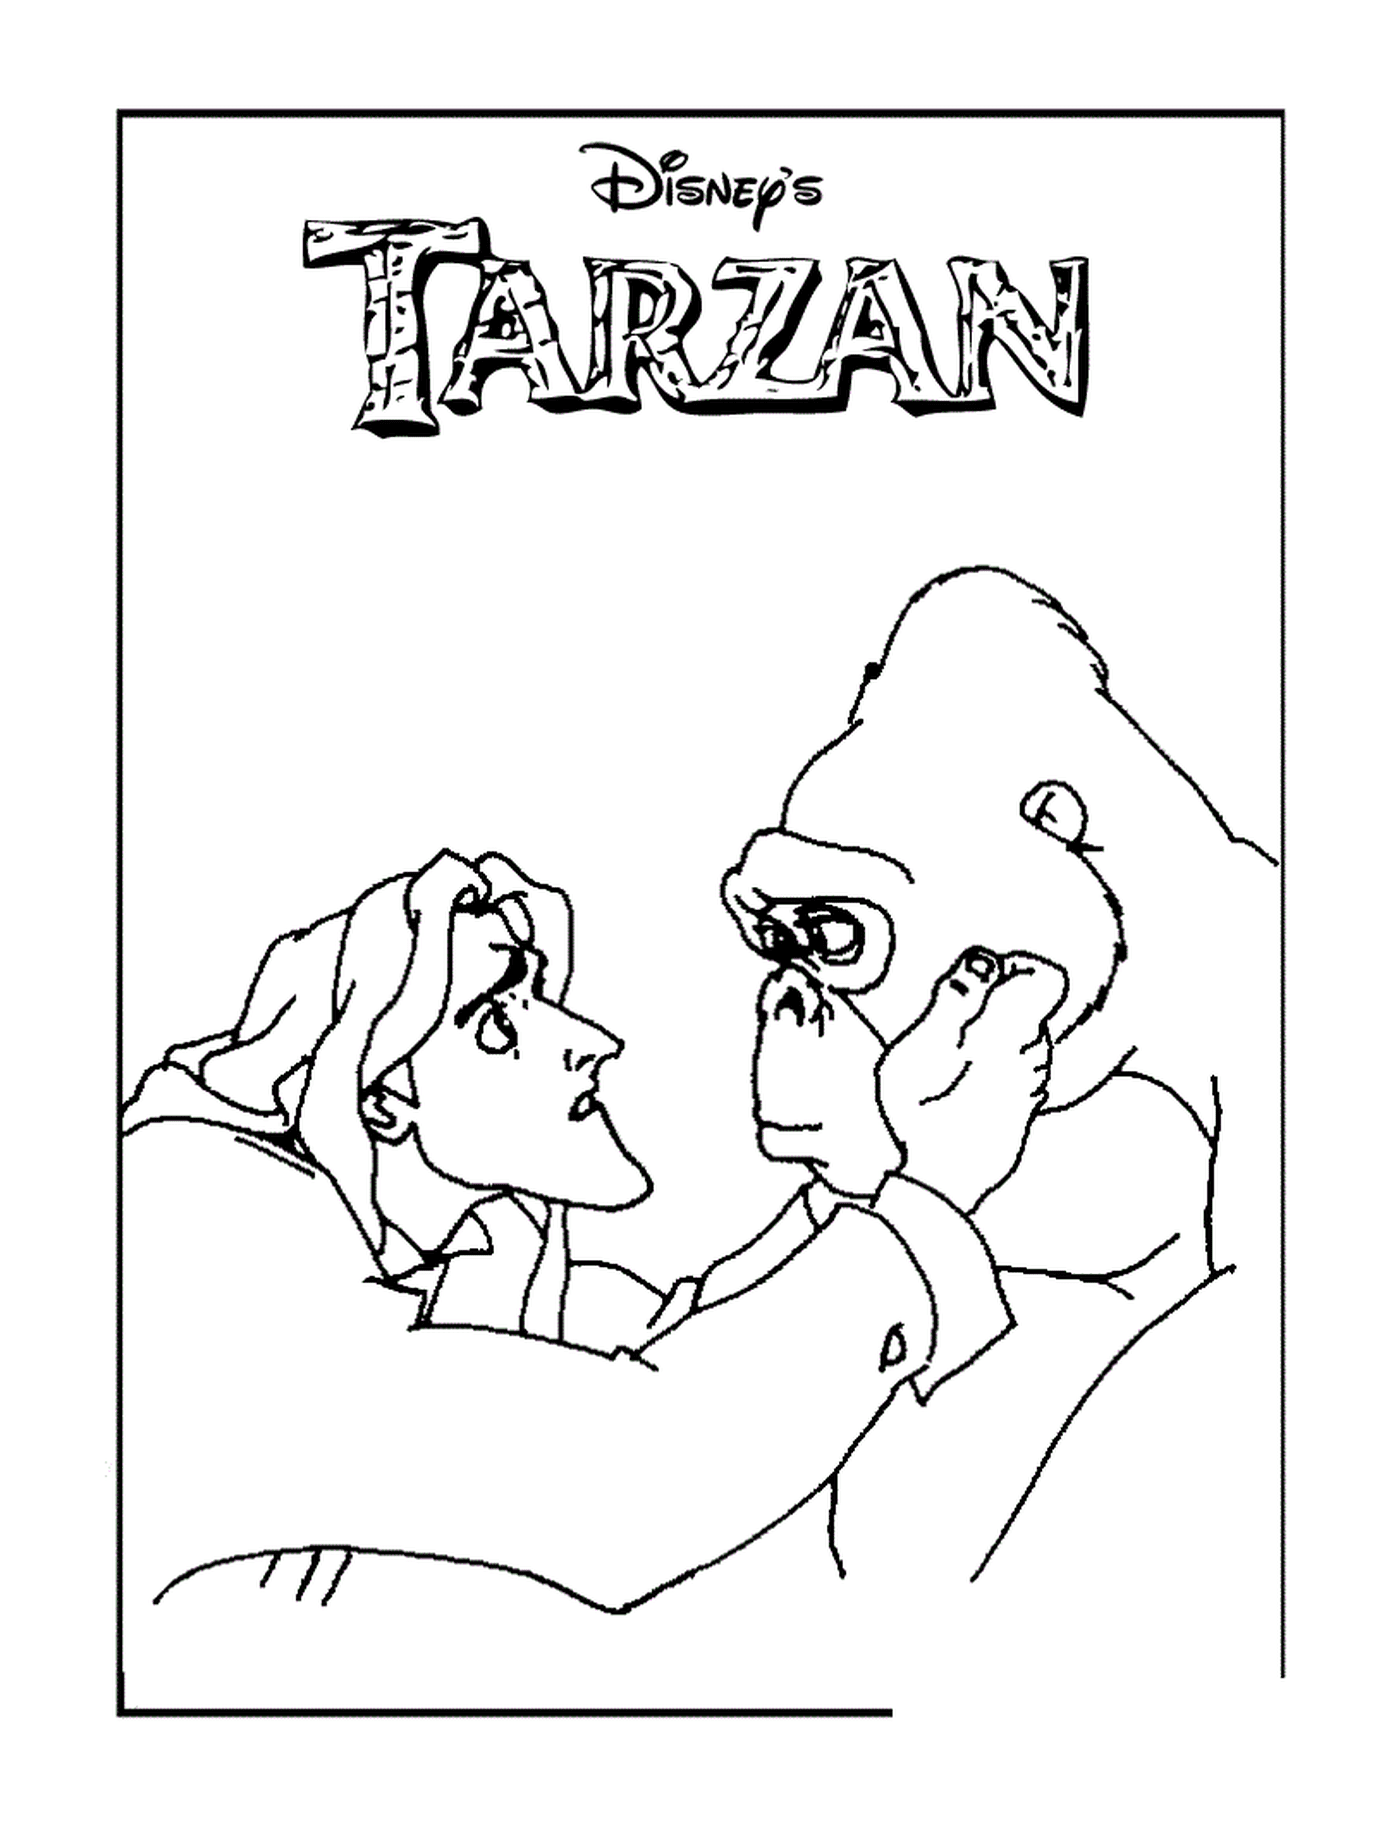  Tarzan e gorilla 